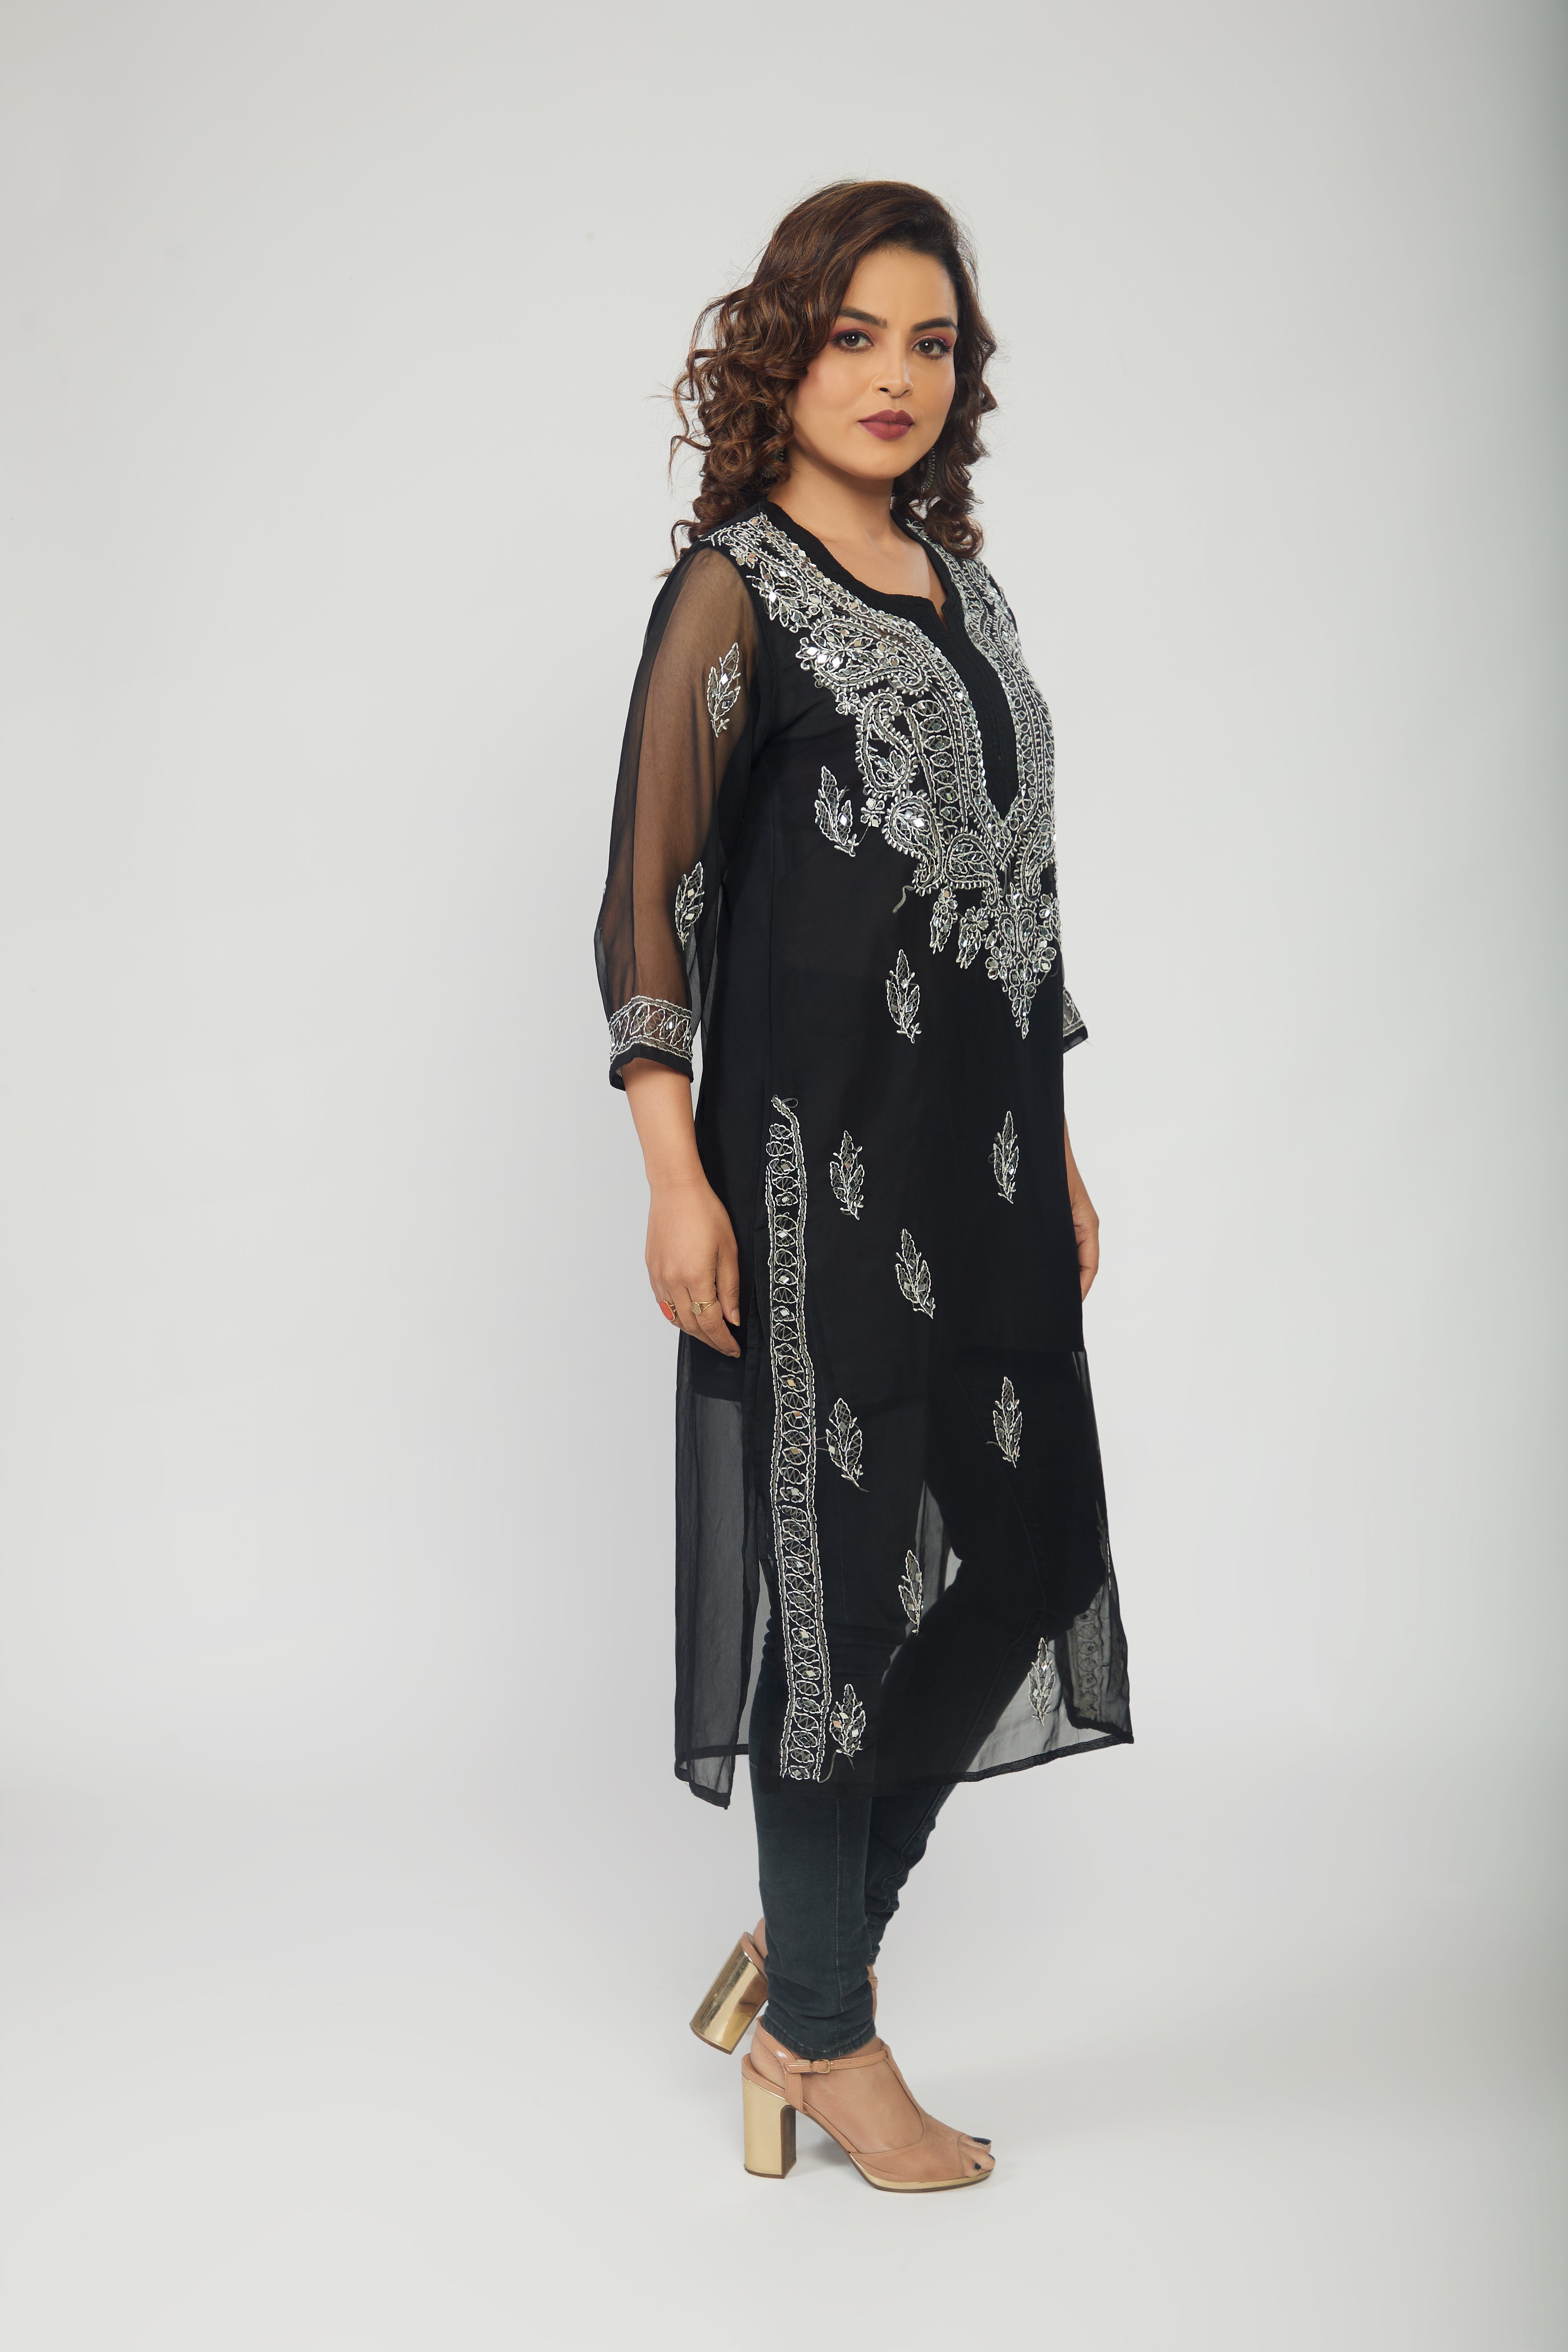 Buy Kurti For Women Online In India | Reeta Fashion